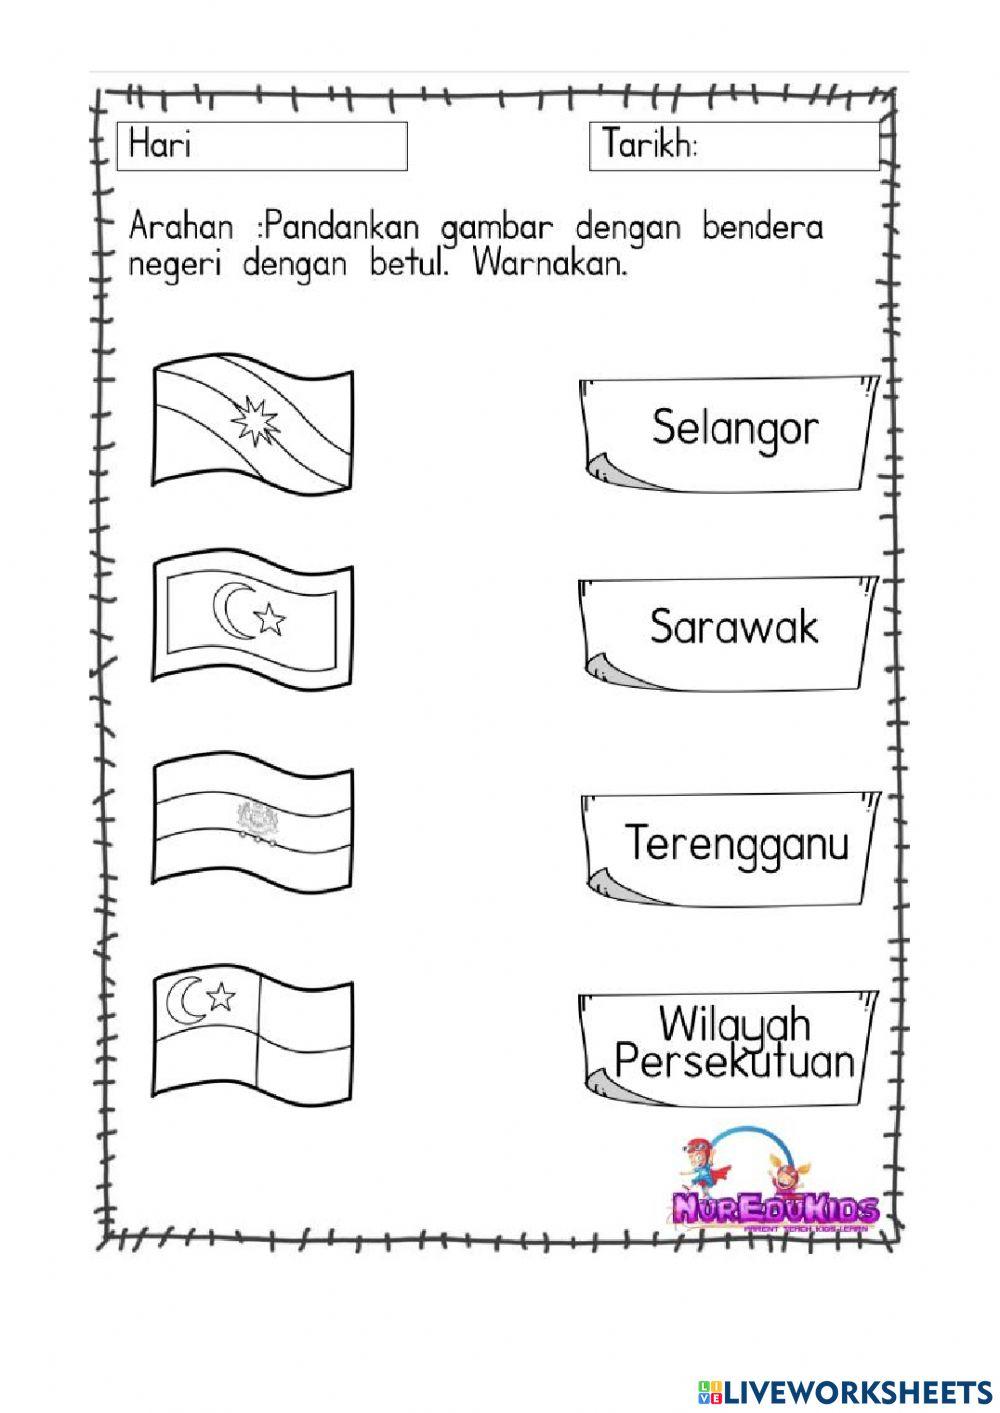 Negeri-negeri di malaysia